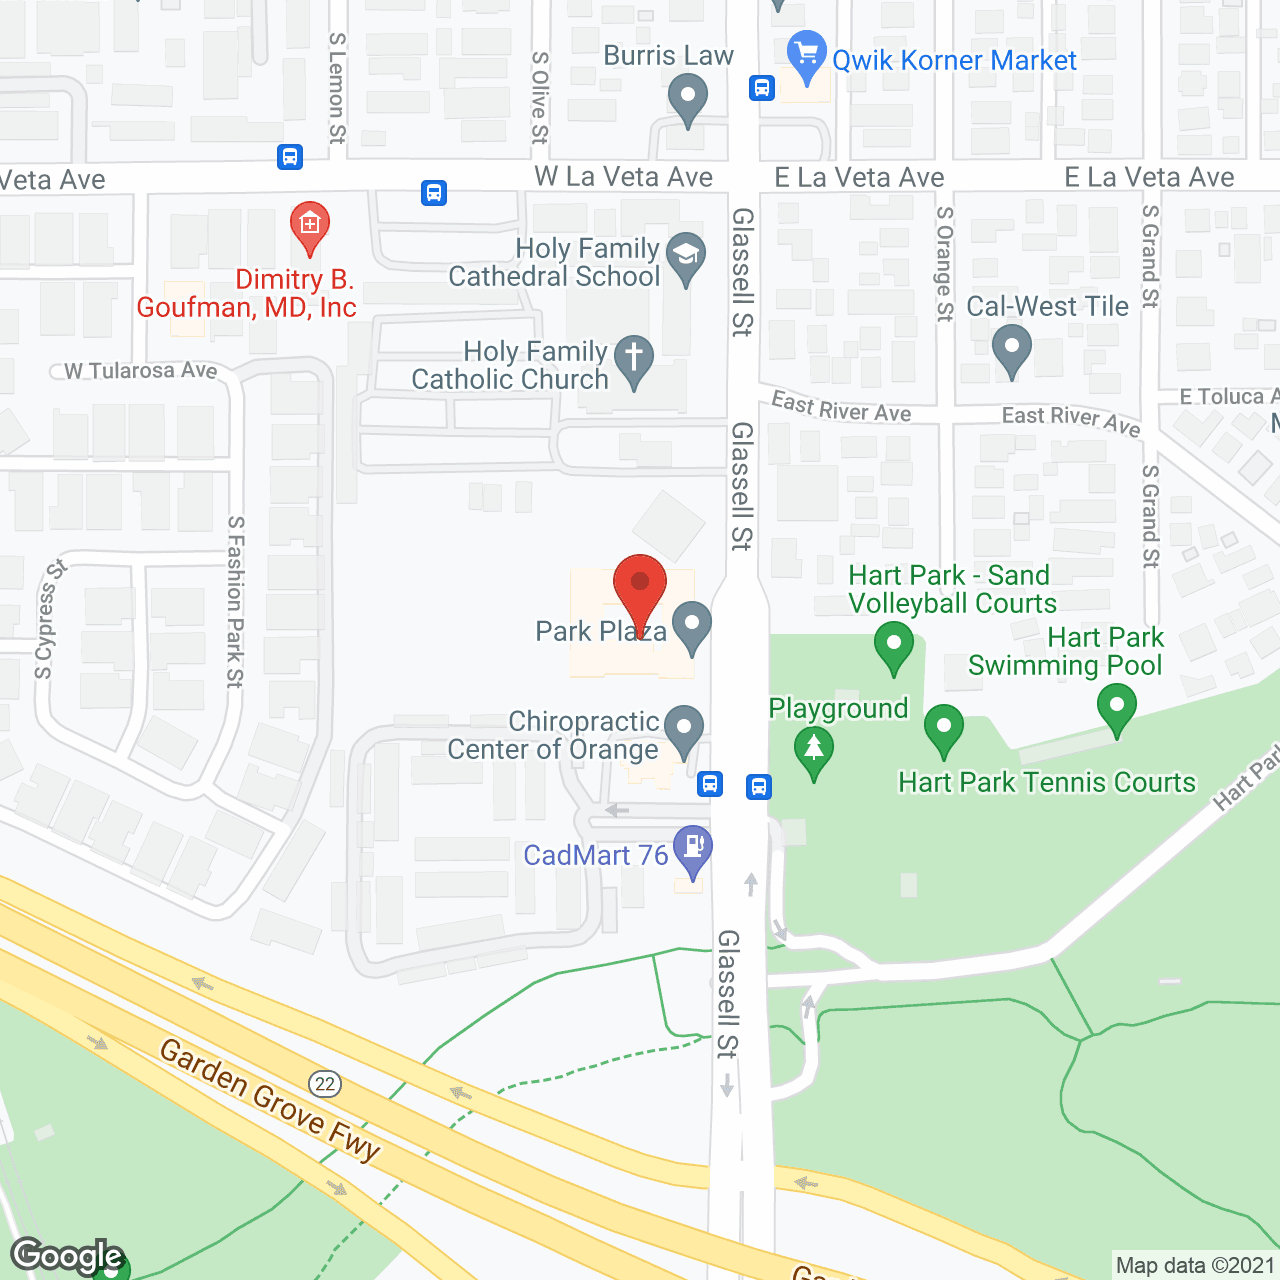 Park Plaza in google map